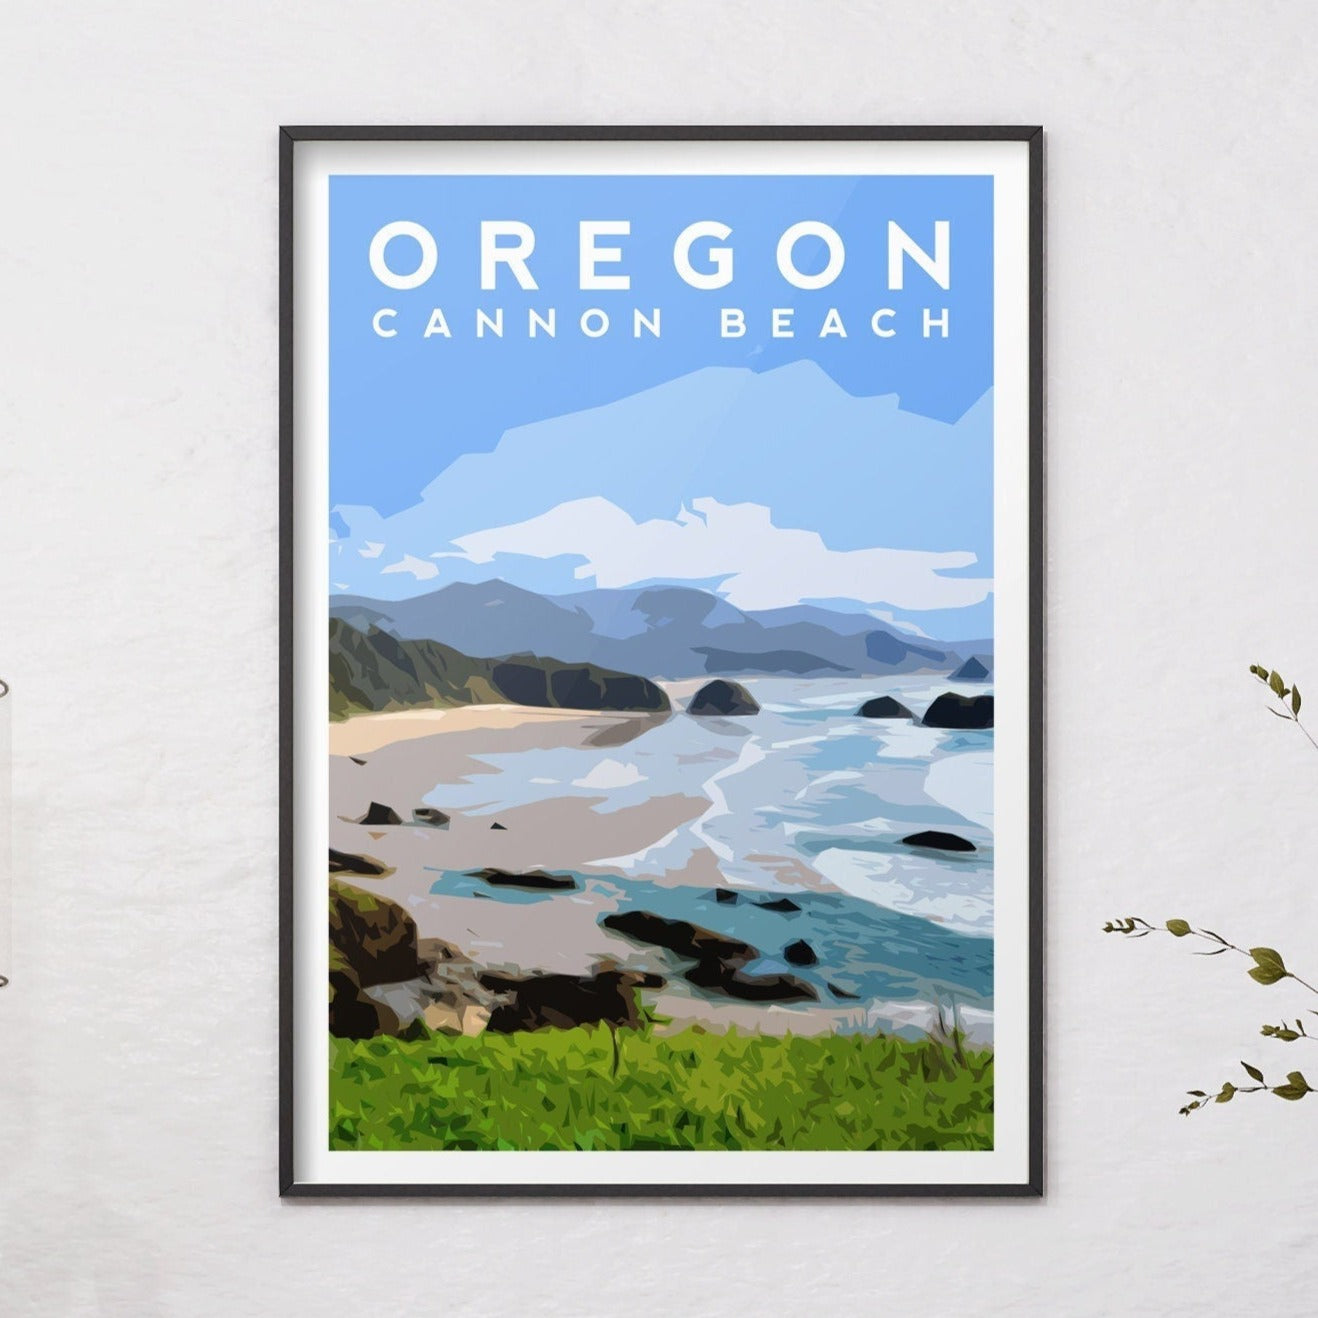 Oregon US, Cannon Beach Travel Print Typelab